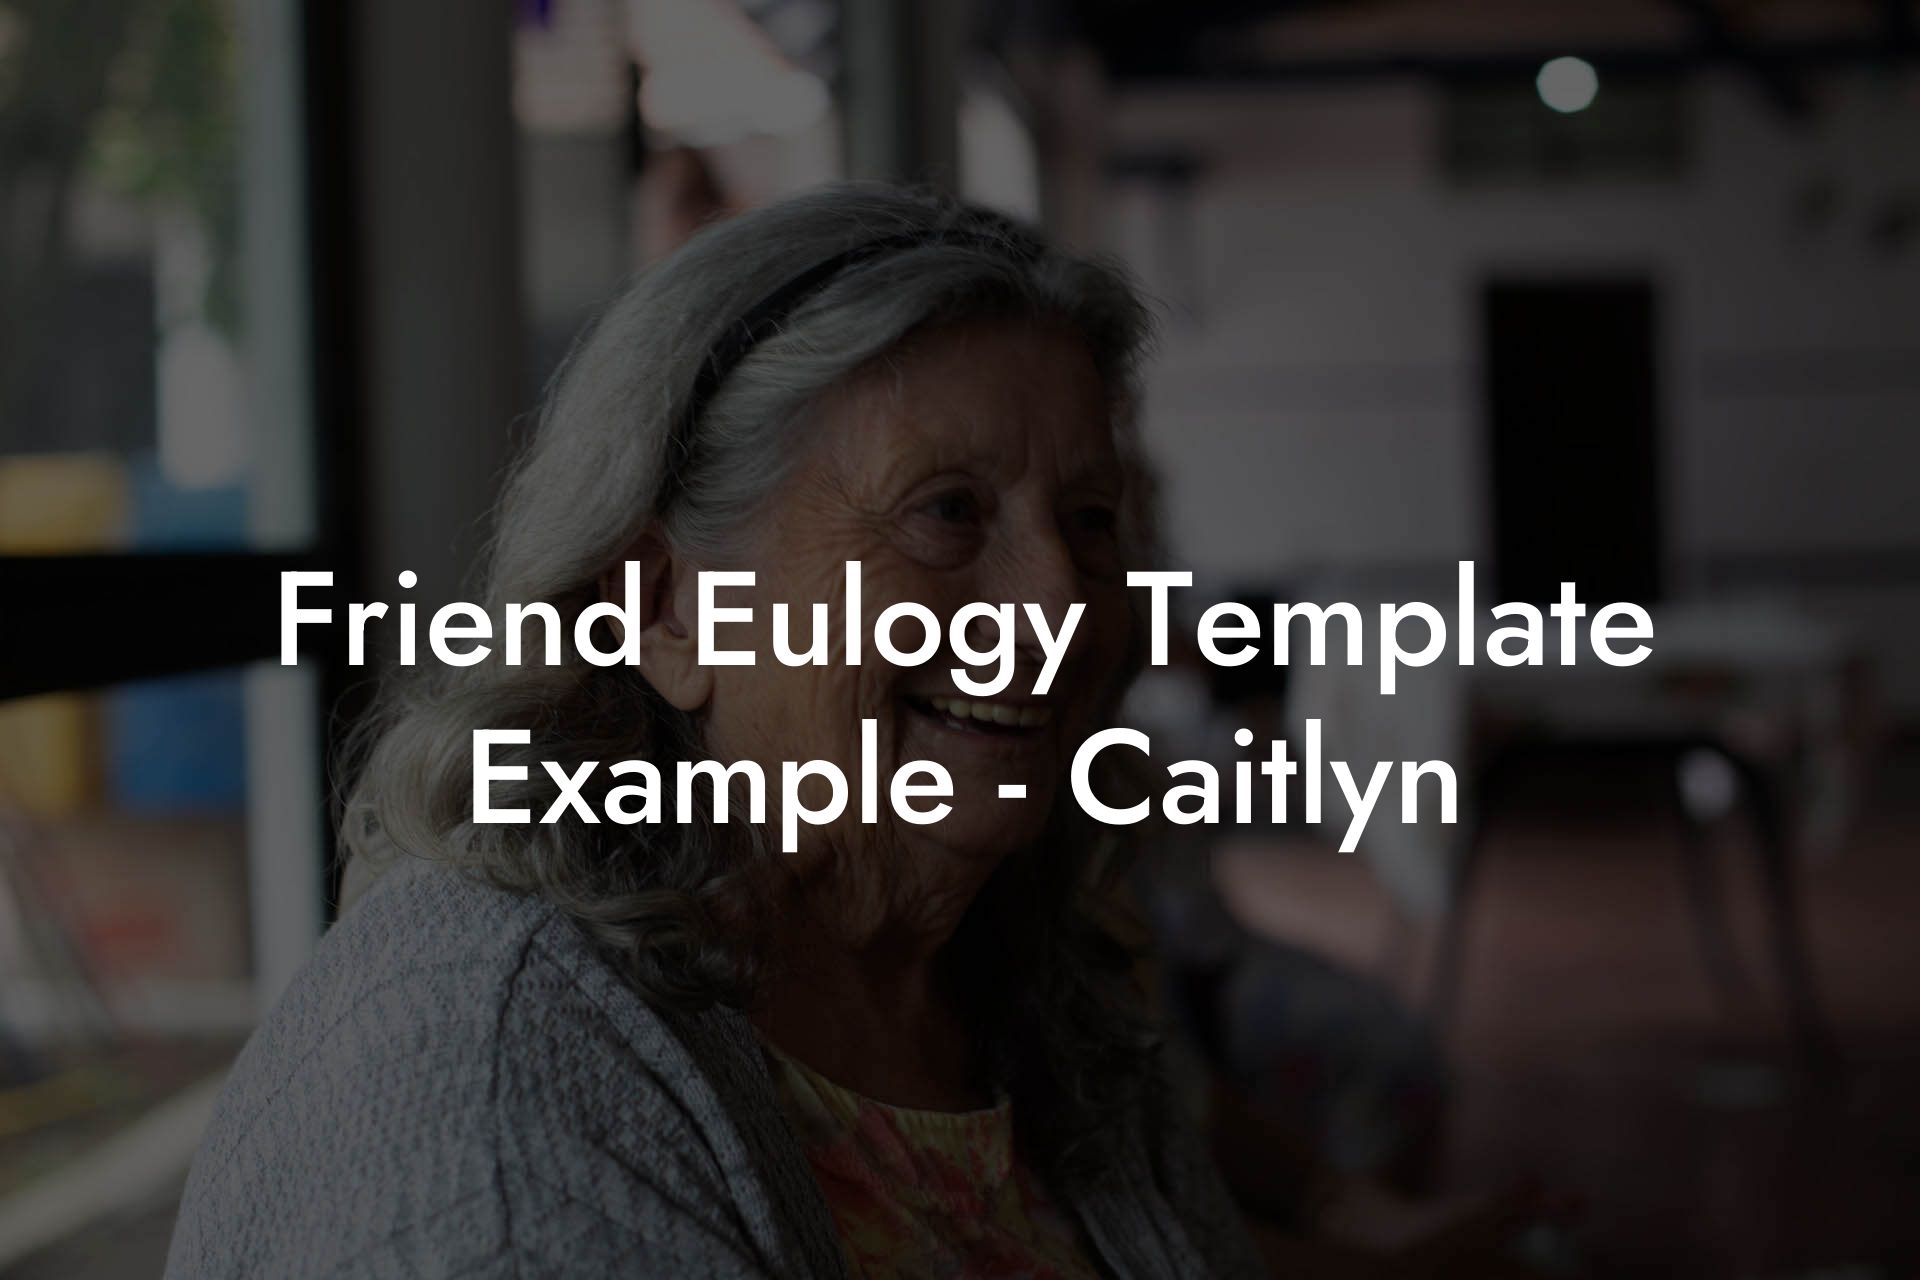 Friend Eulogy Template Example - Caitlyn